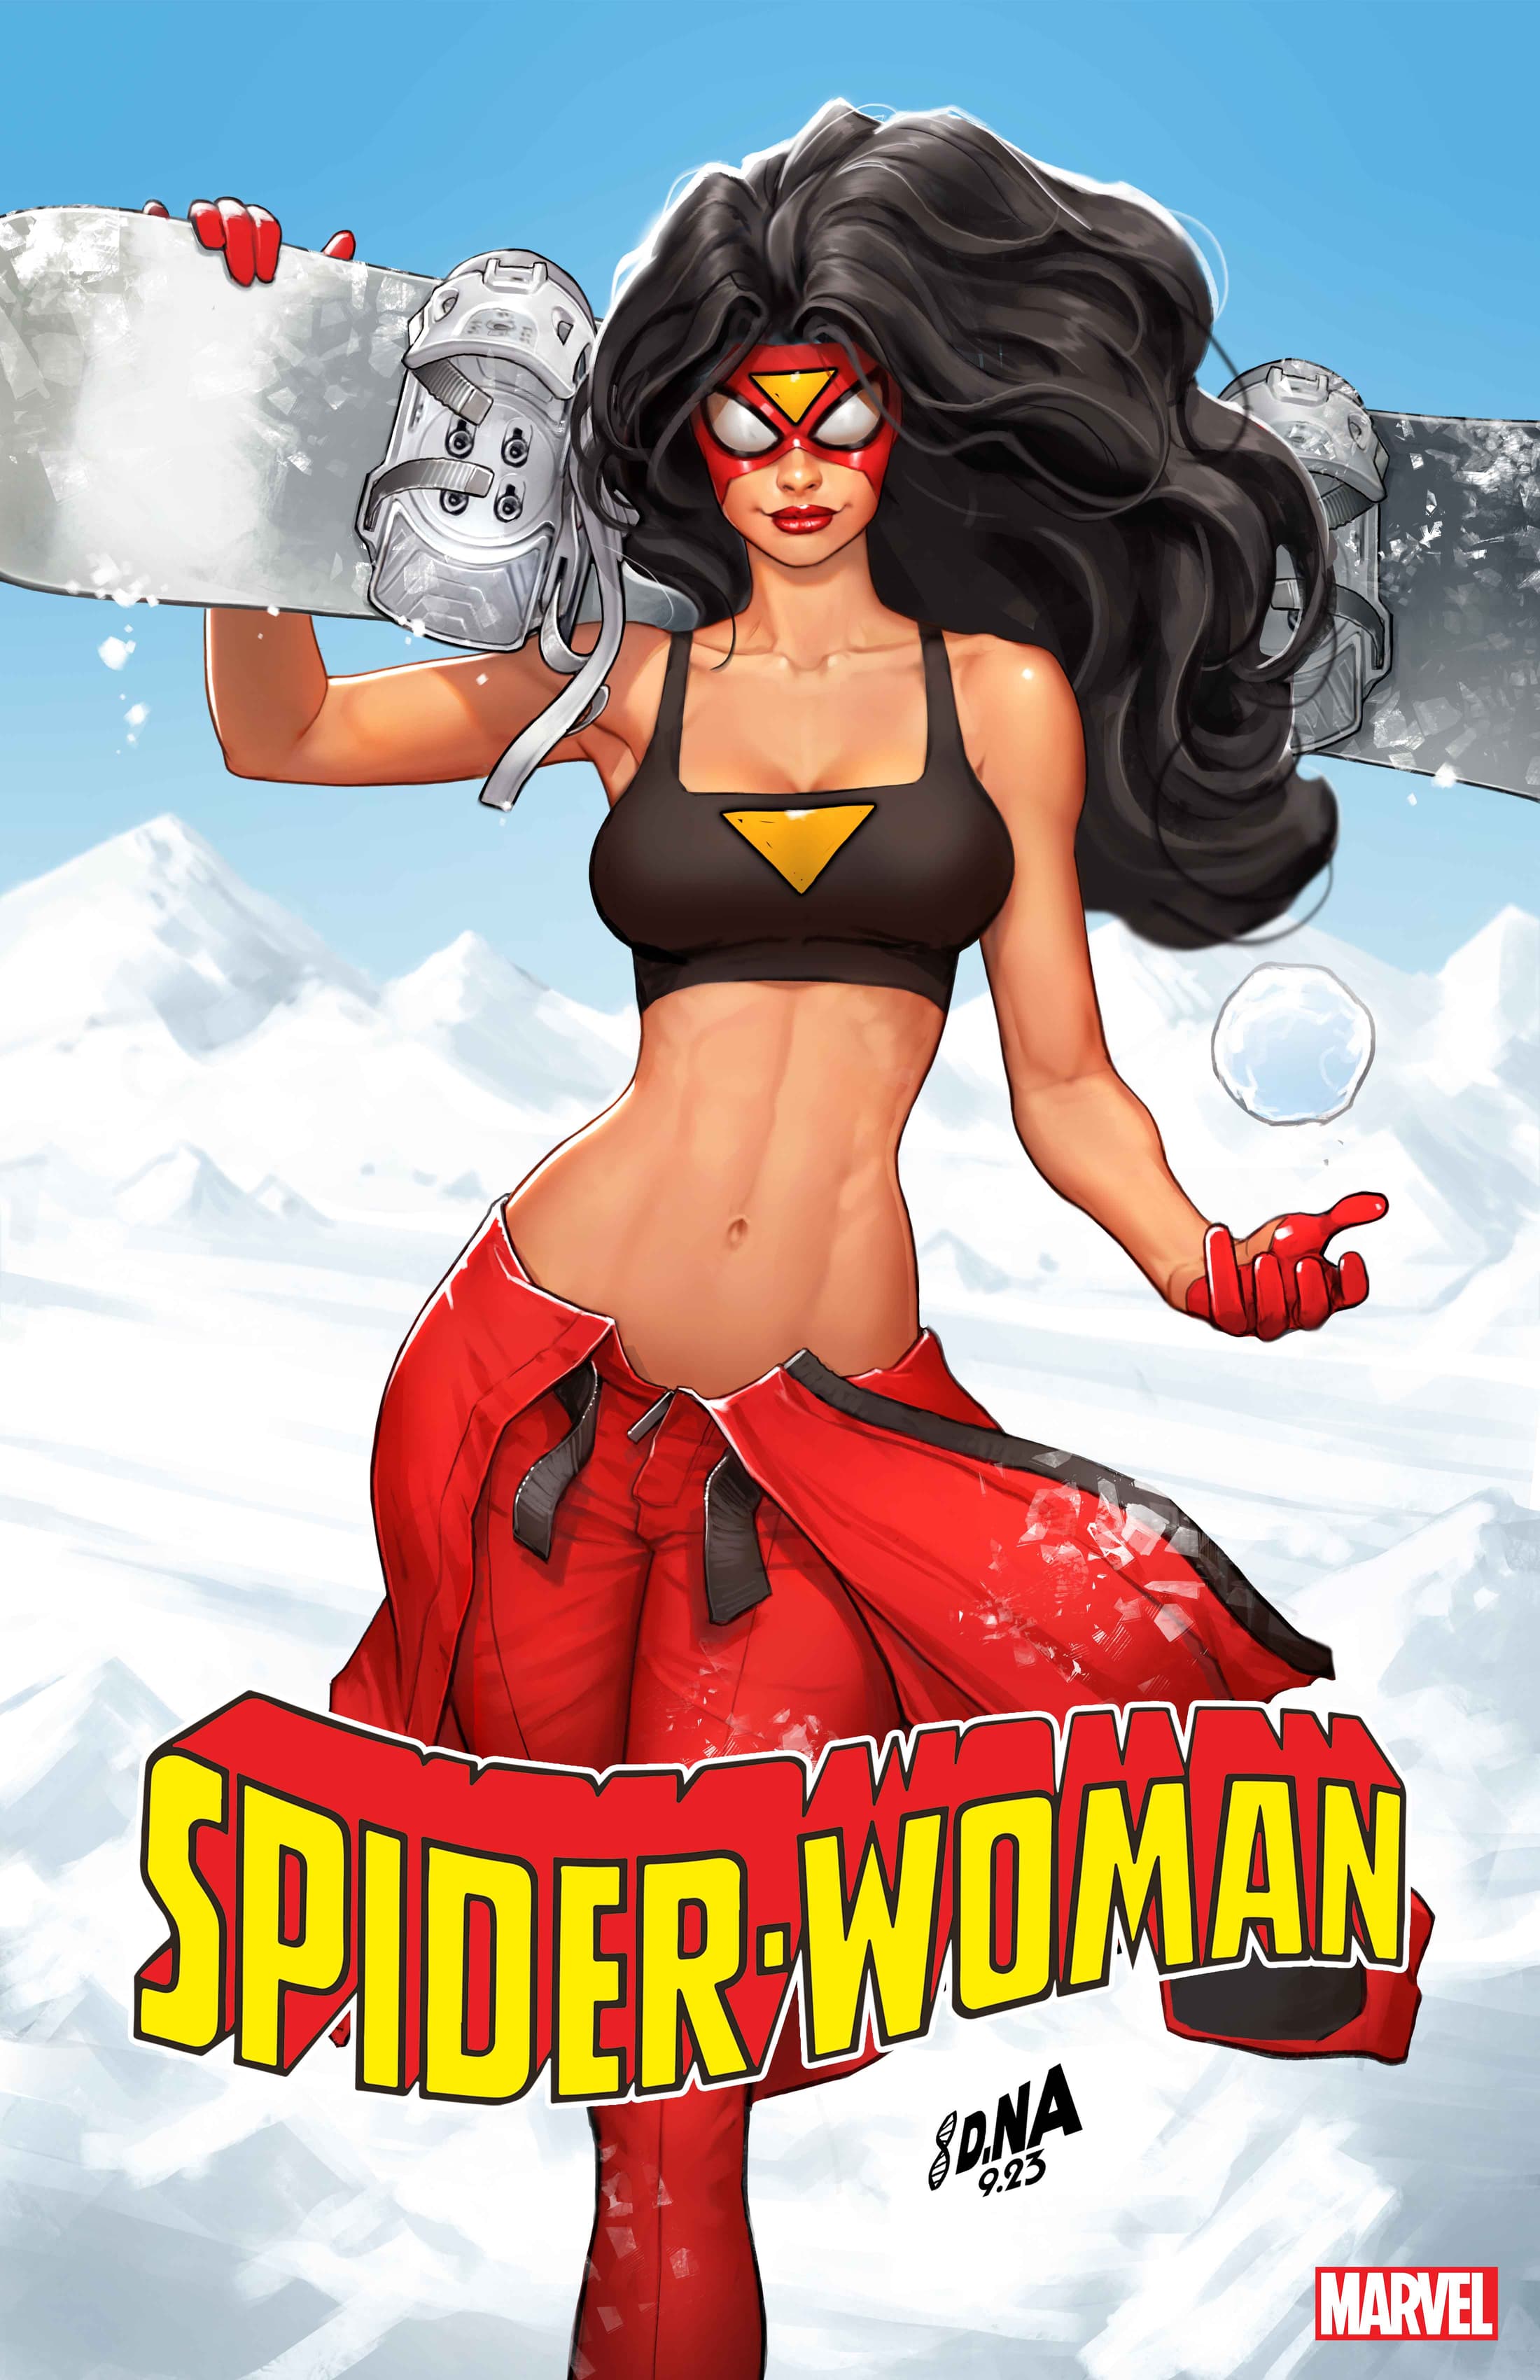 SPIDER-WOMAN #2 Ski Chalet Variant Cover by David Nakayama​​​​​​​